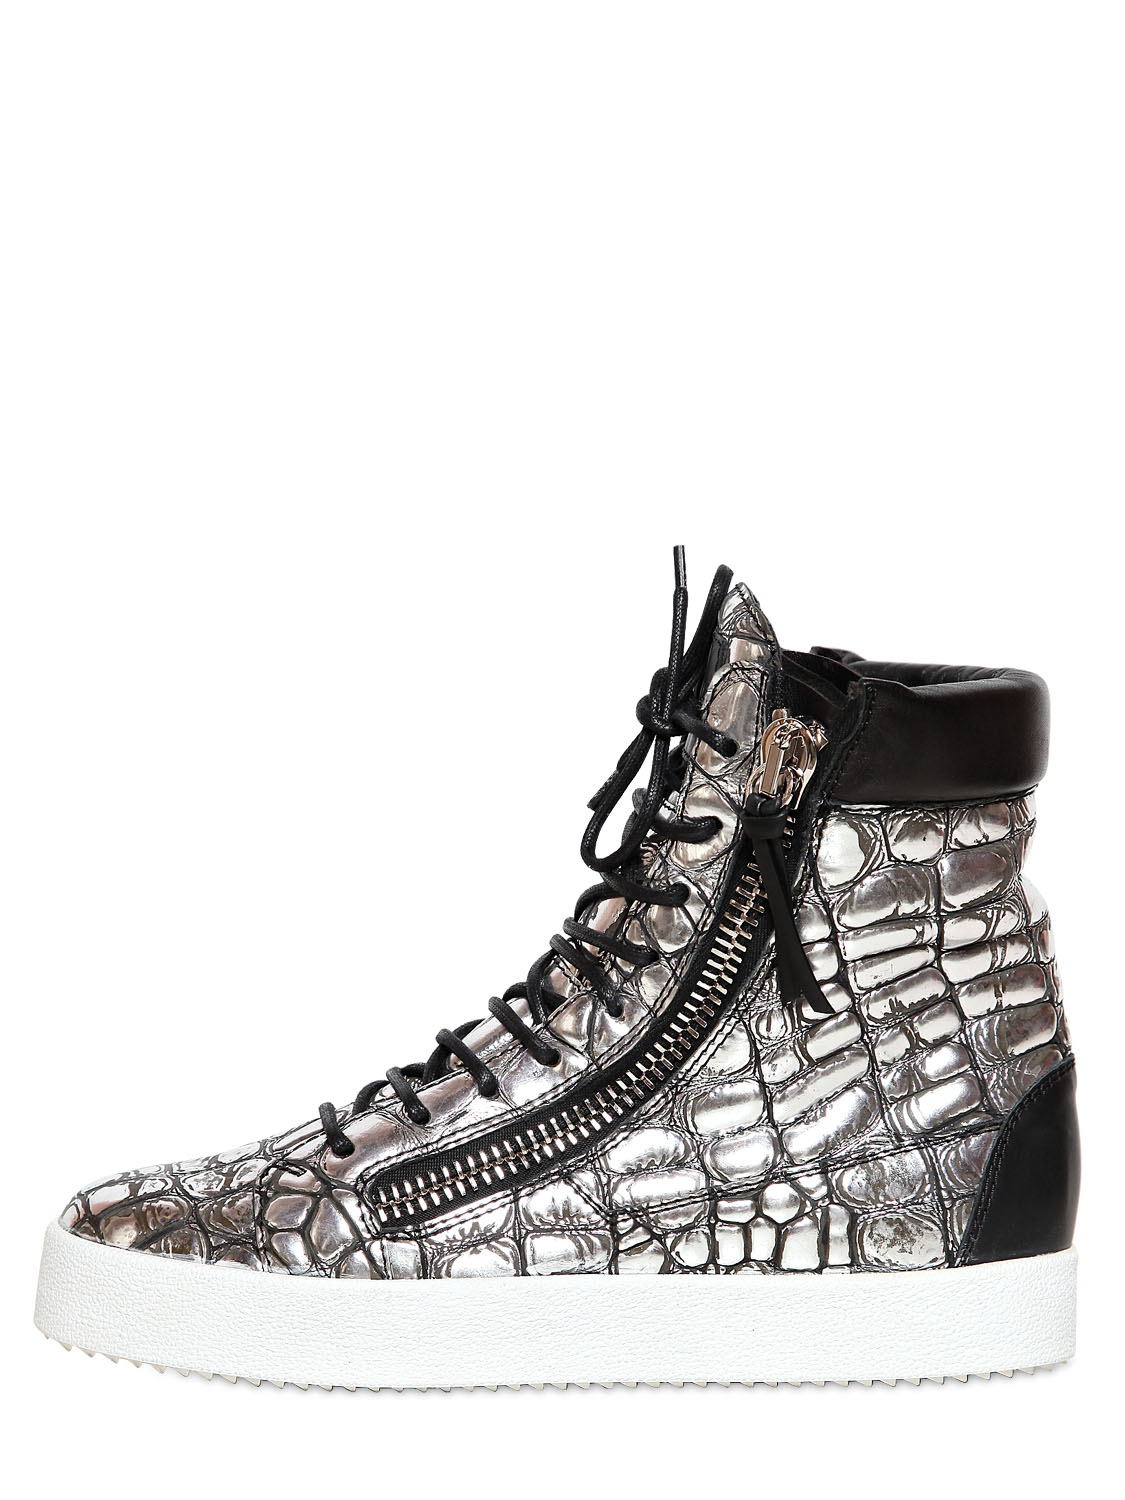 Giuseppe Zanotti Homme Croc Embossed Metallic Leather Sneakers in ...